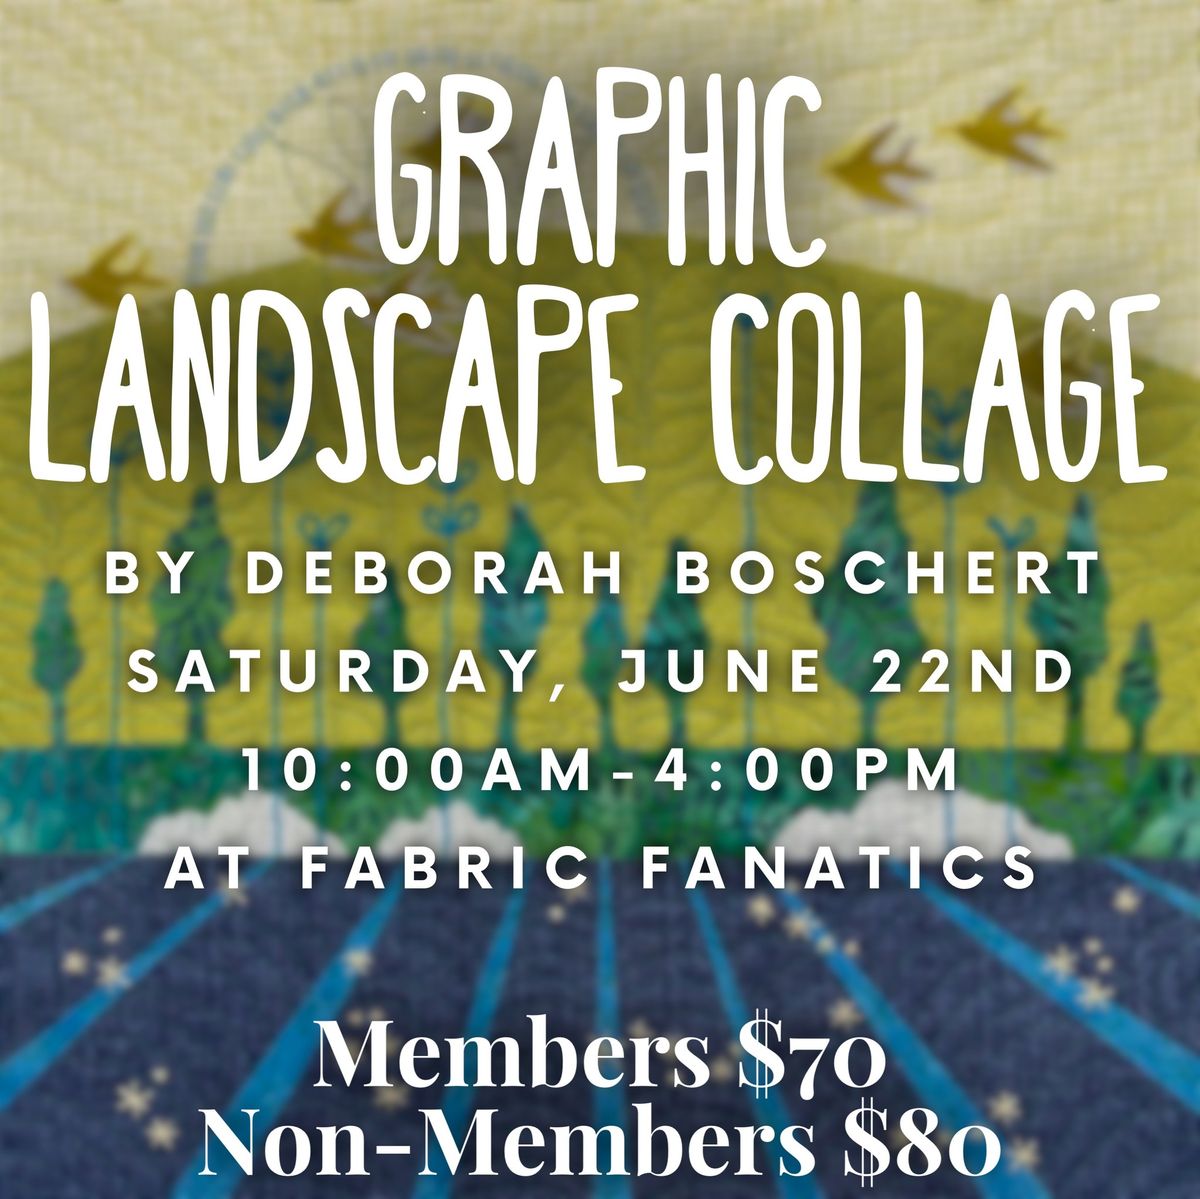 Graphic Landscape Collage Workshop